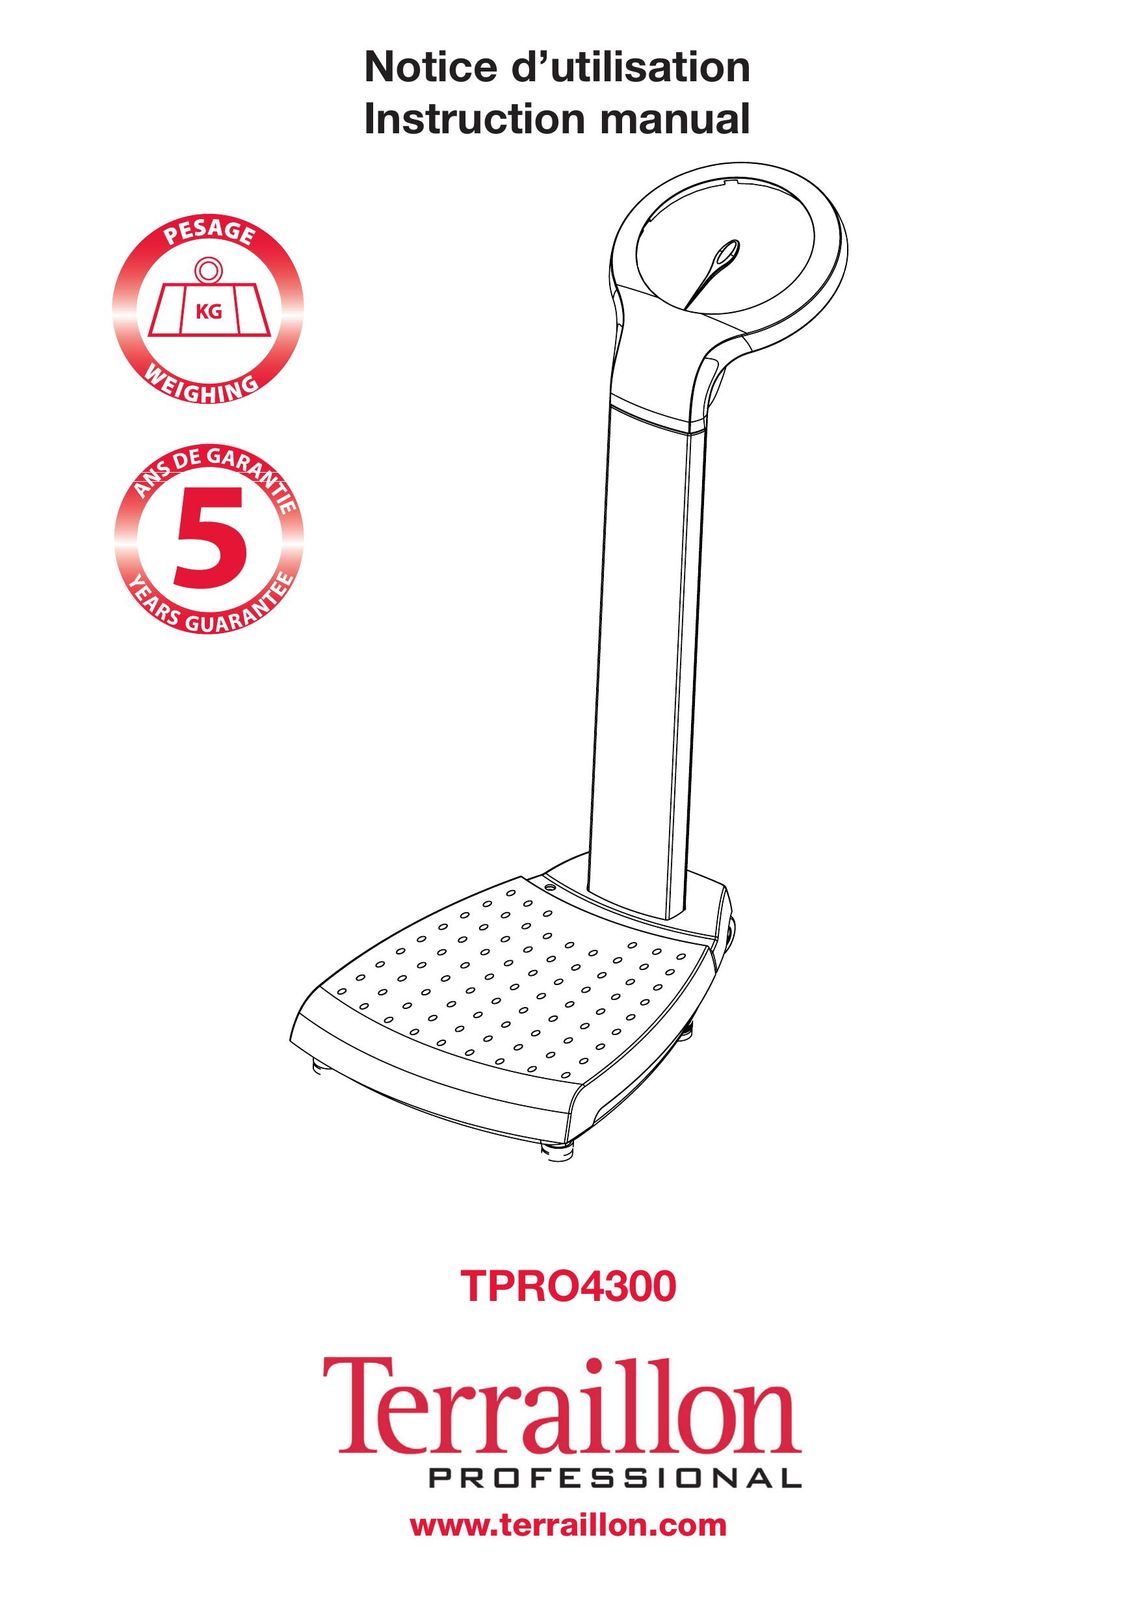 Terraillon TPRO4300 Doll User Manual